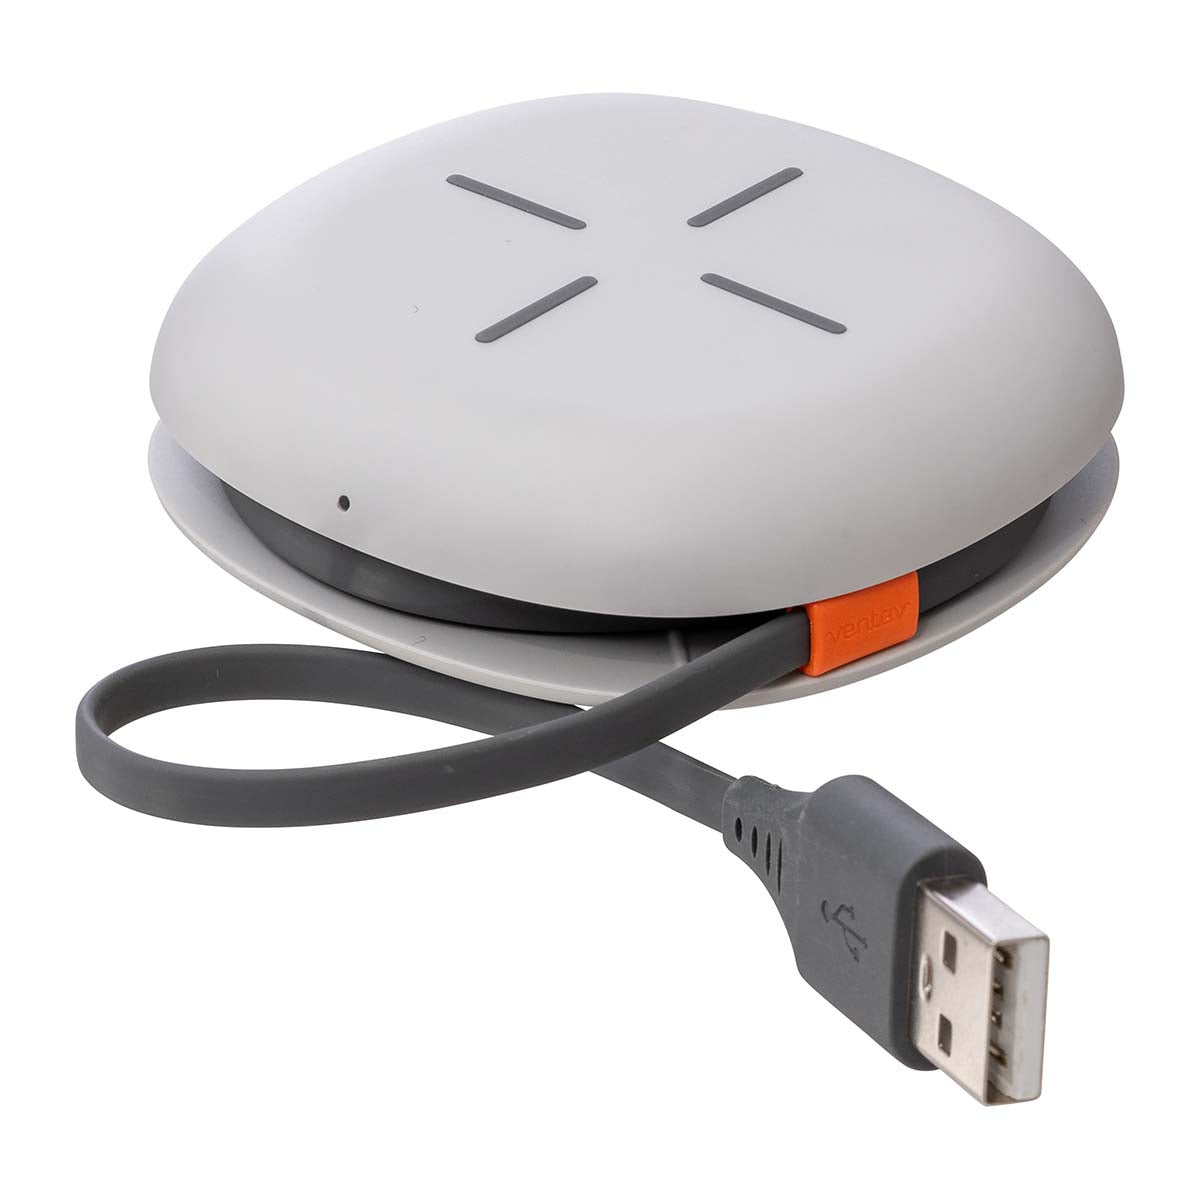 Ventev Wireless Chargewrap Mini